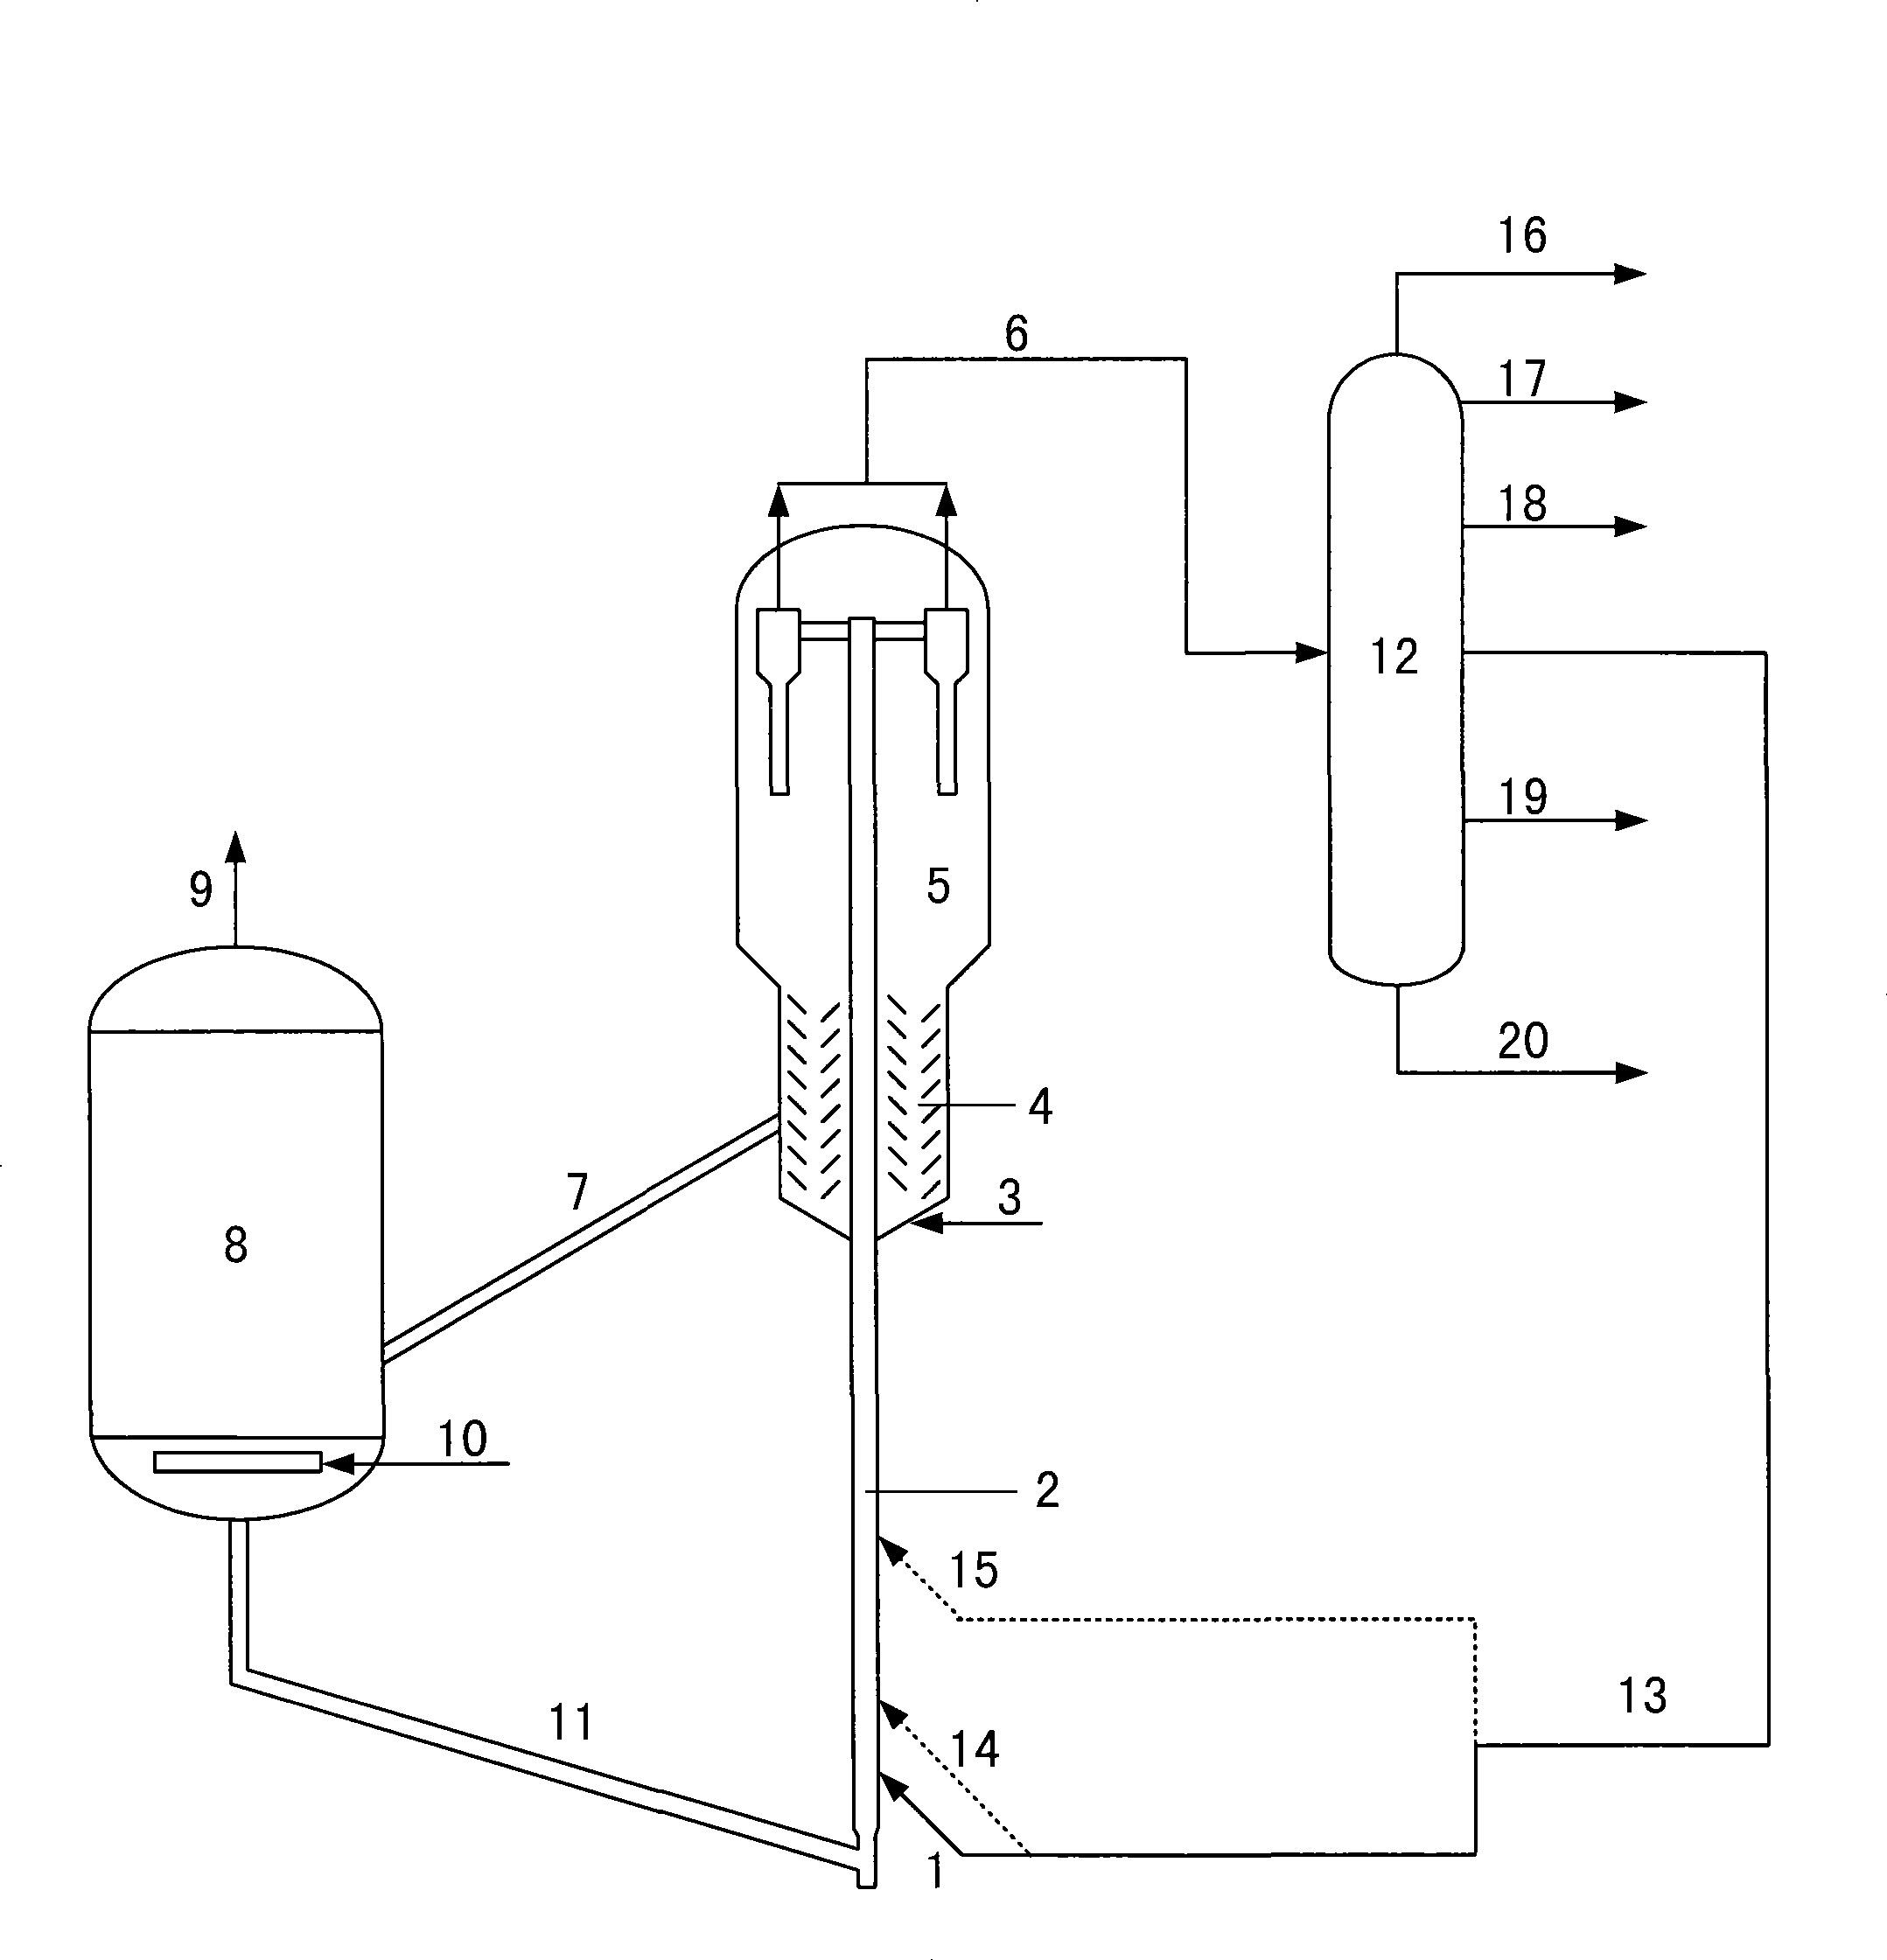 Catalytic conversion method for preparing high-octane number gasoline